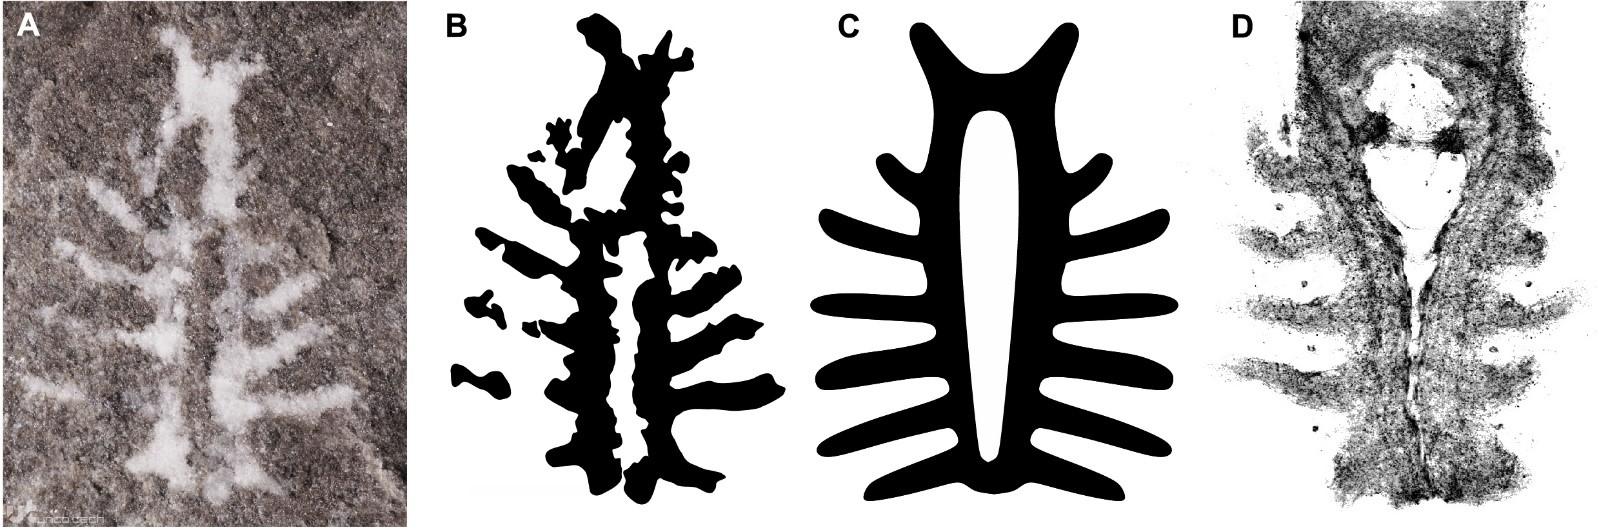 1628014785 interretive drawings of euproops danae brain  credit a c russell bicknell and d steffen harzsch - کشف فسیل 310 میلیون ساله از مغز یک خرچنگ نعل اسبی